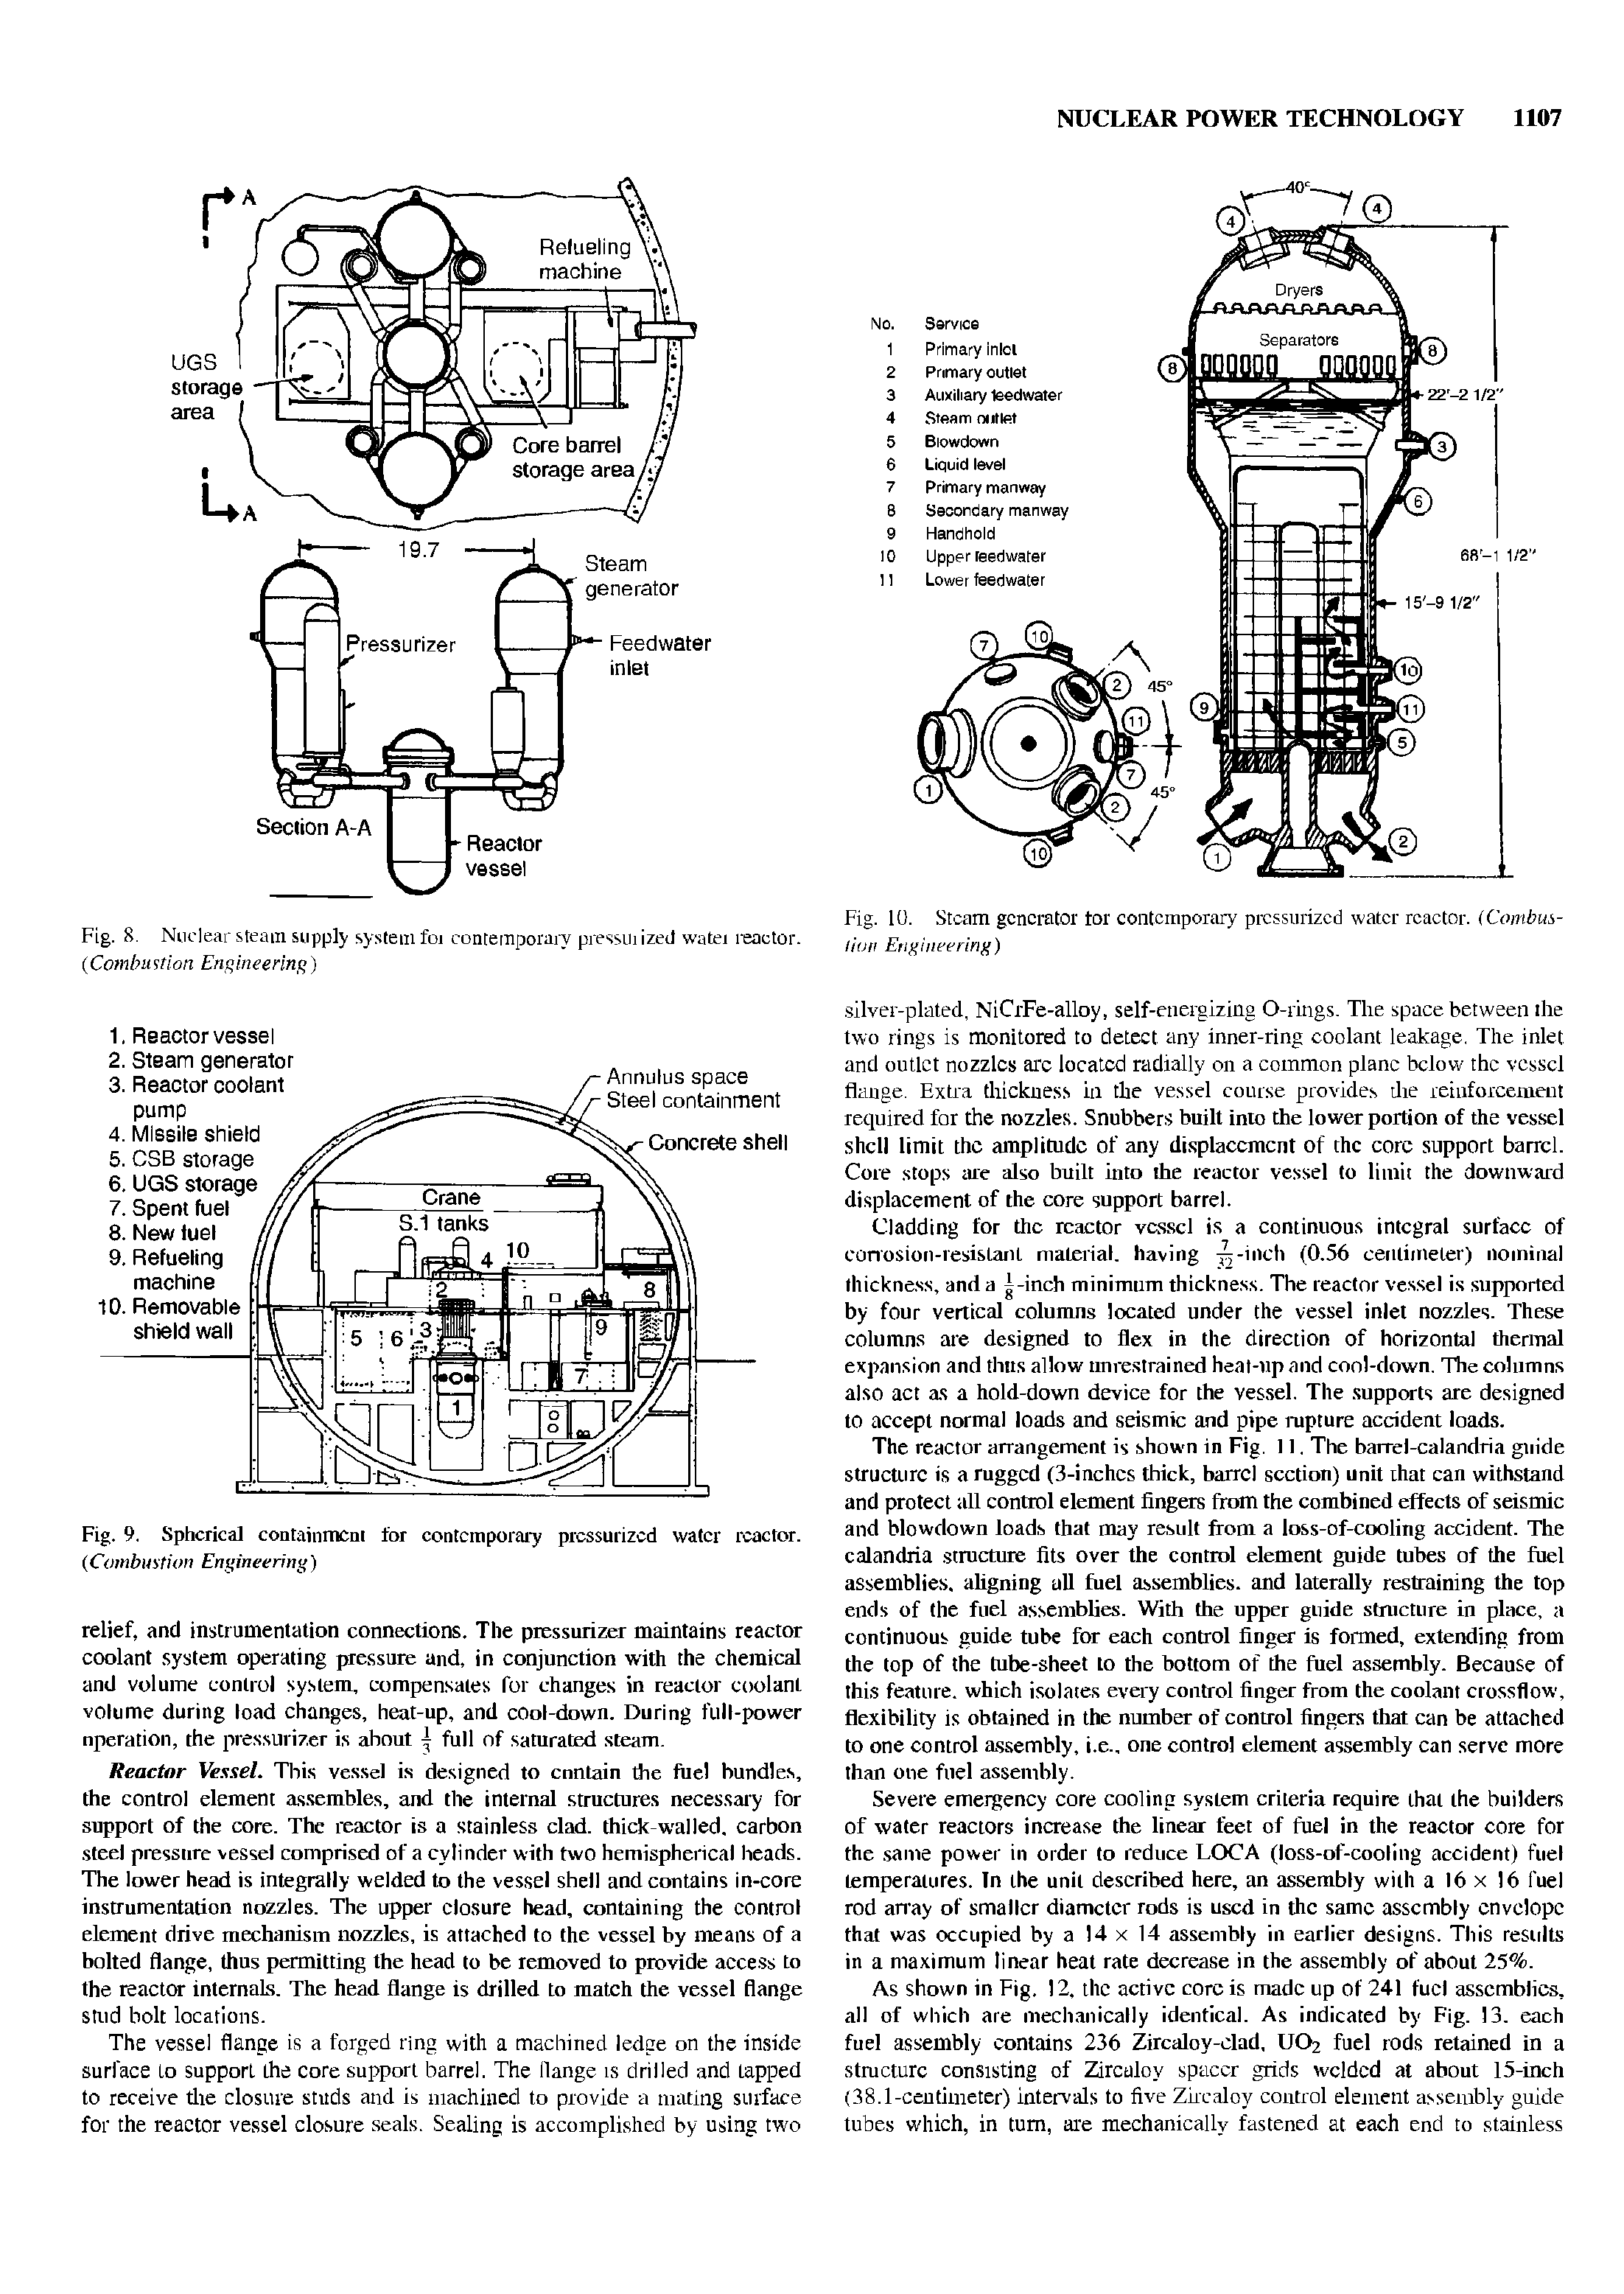 Fig. 10. Steam generator tor contemporary pressurized water reactor. (Combustion Ettgineeririg)...